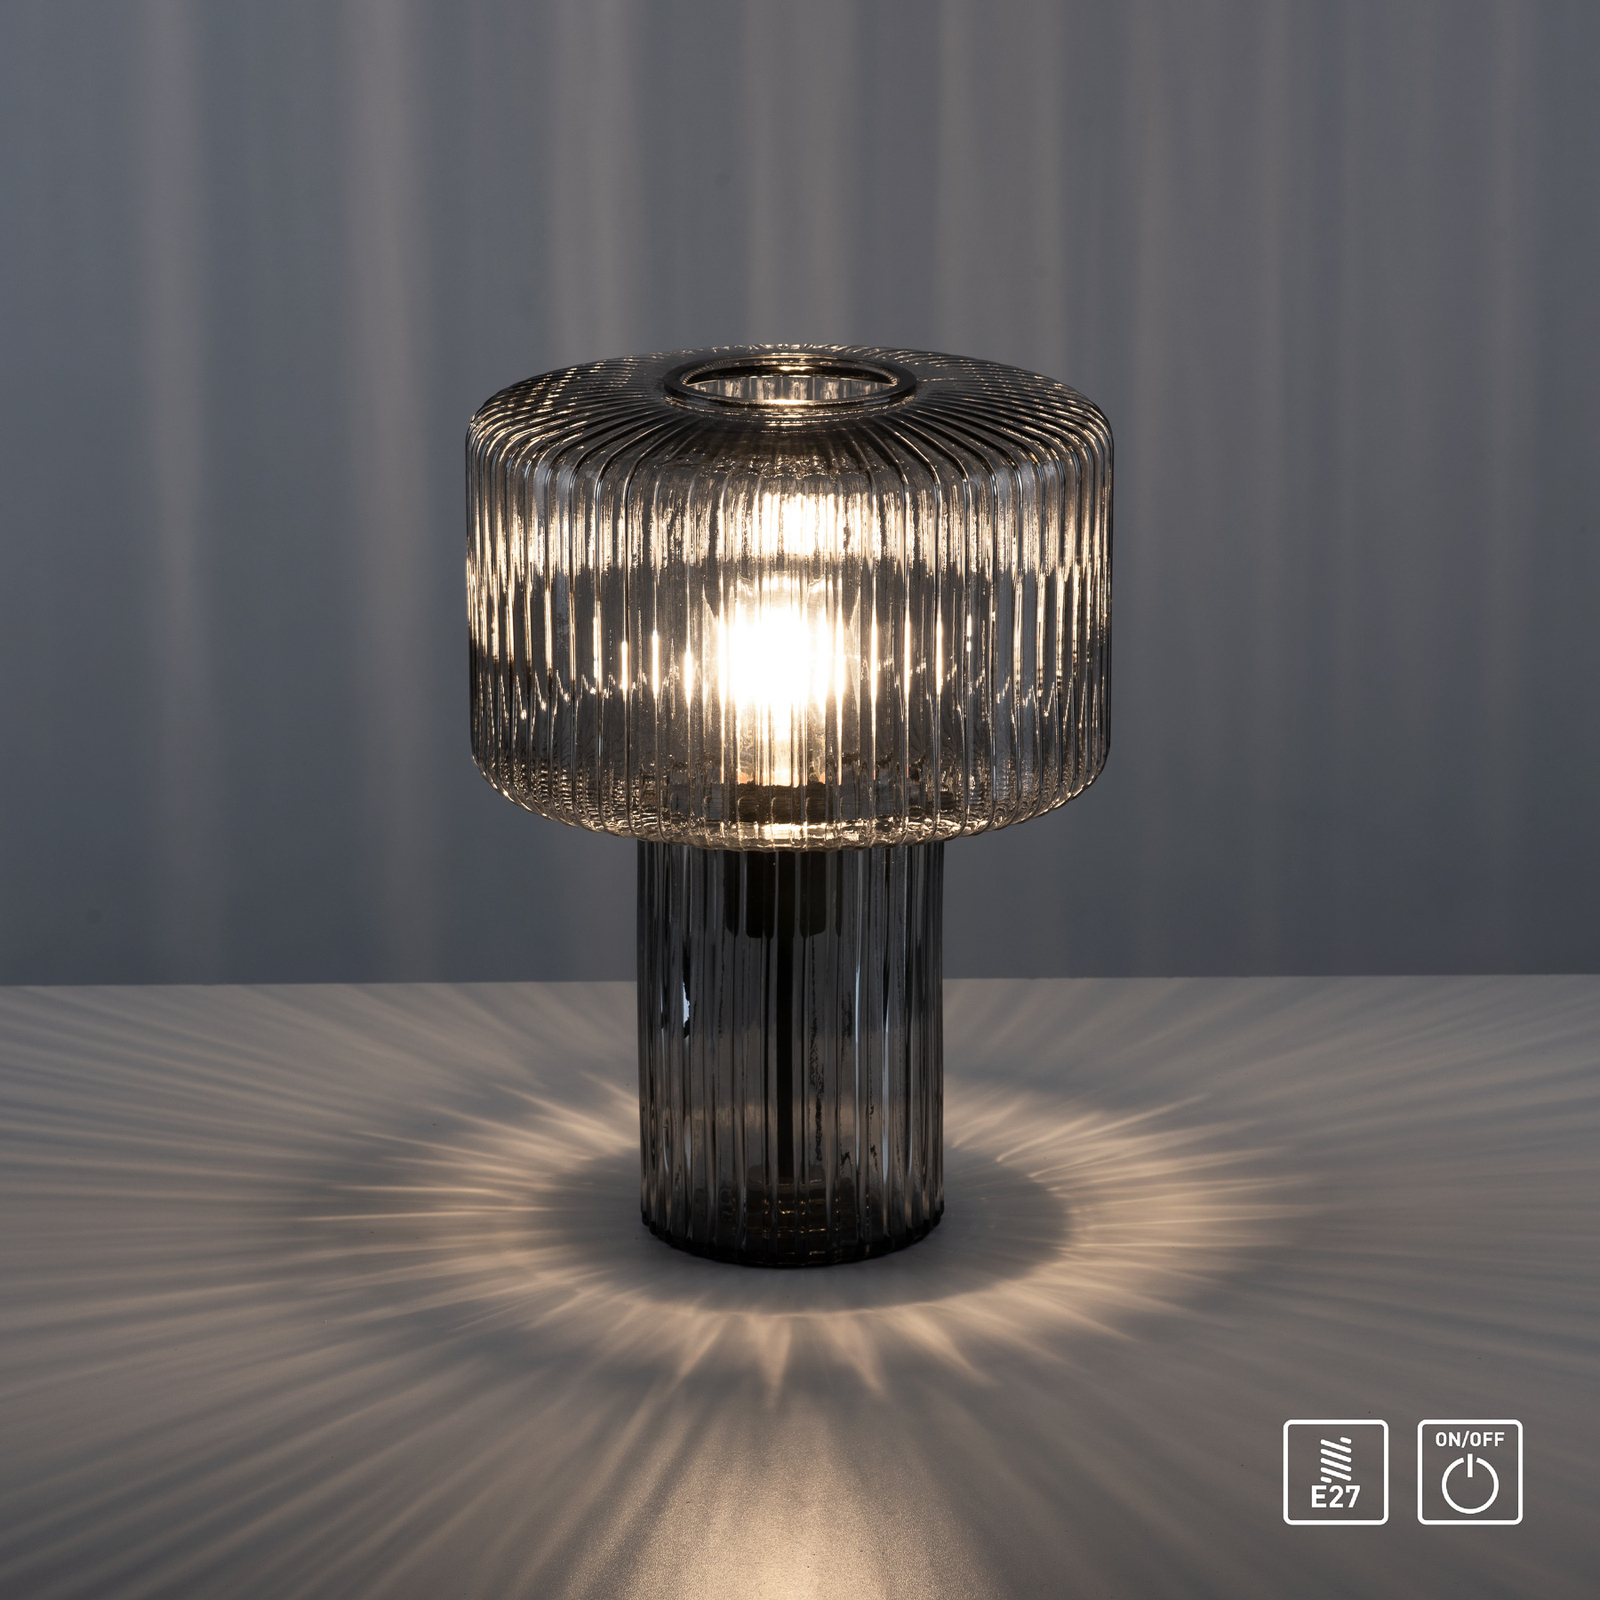 Fungus table lamp made of glass, smoke-coloured